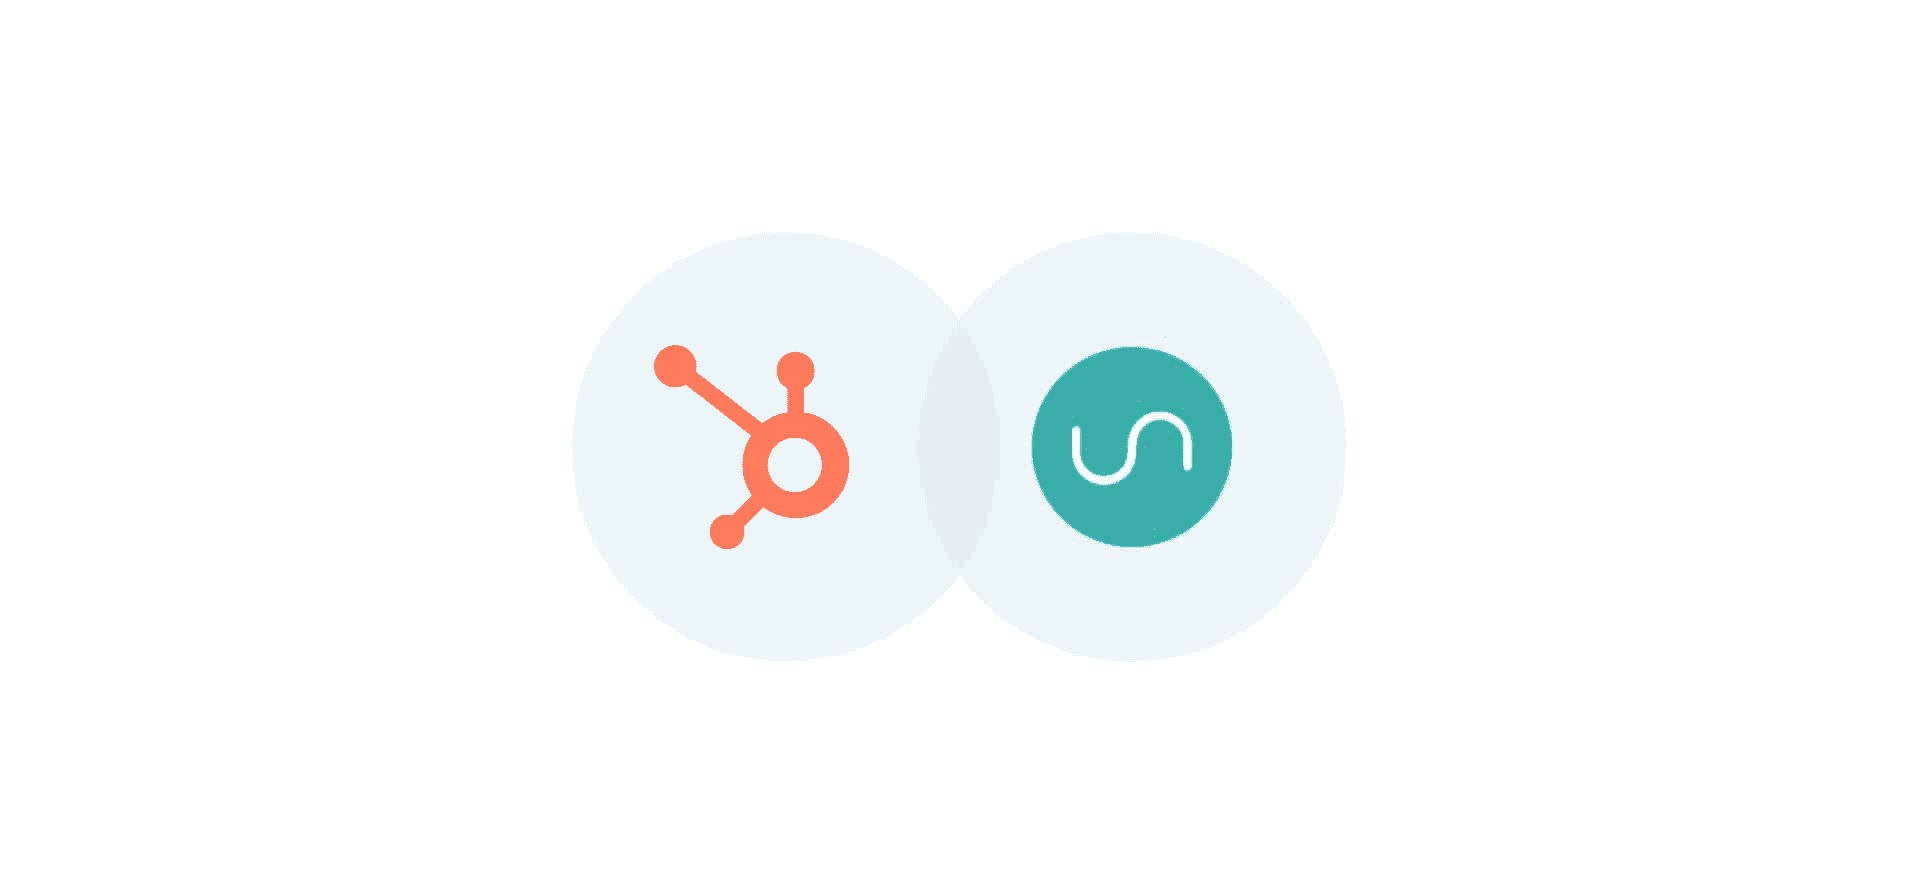 Logos for HubSpot and Unito, representing Unito's new HubSpot Deals integration